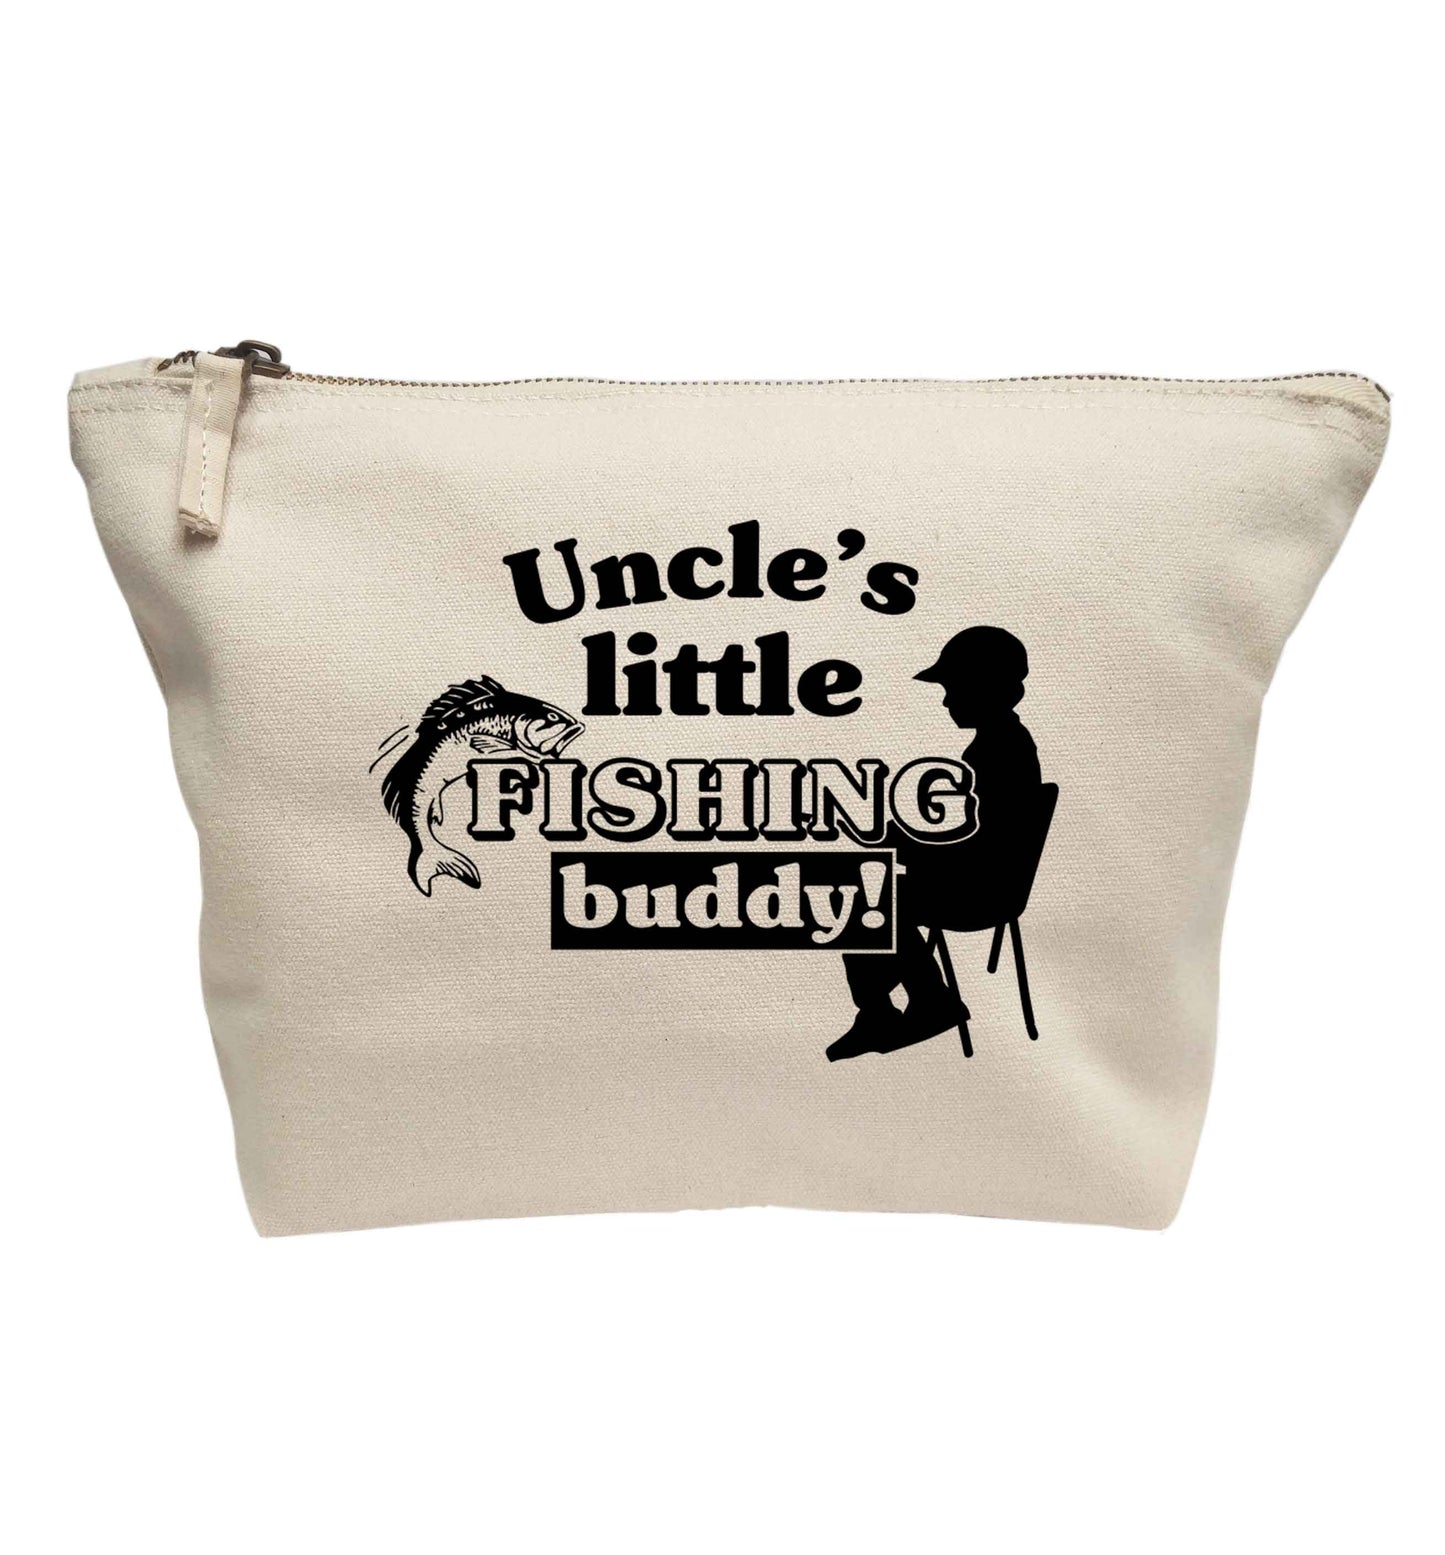 Uncle's little fishing buddy | makeup / wash bag